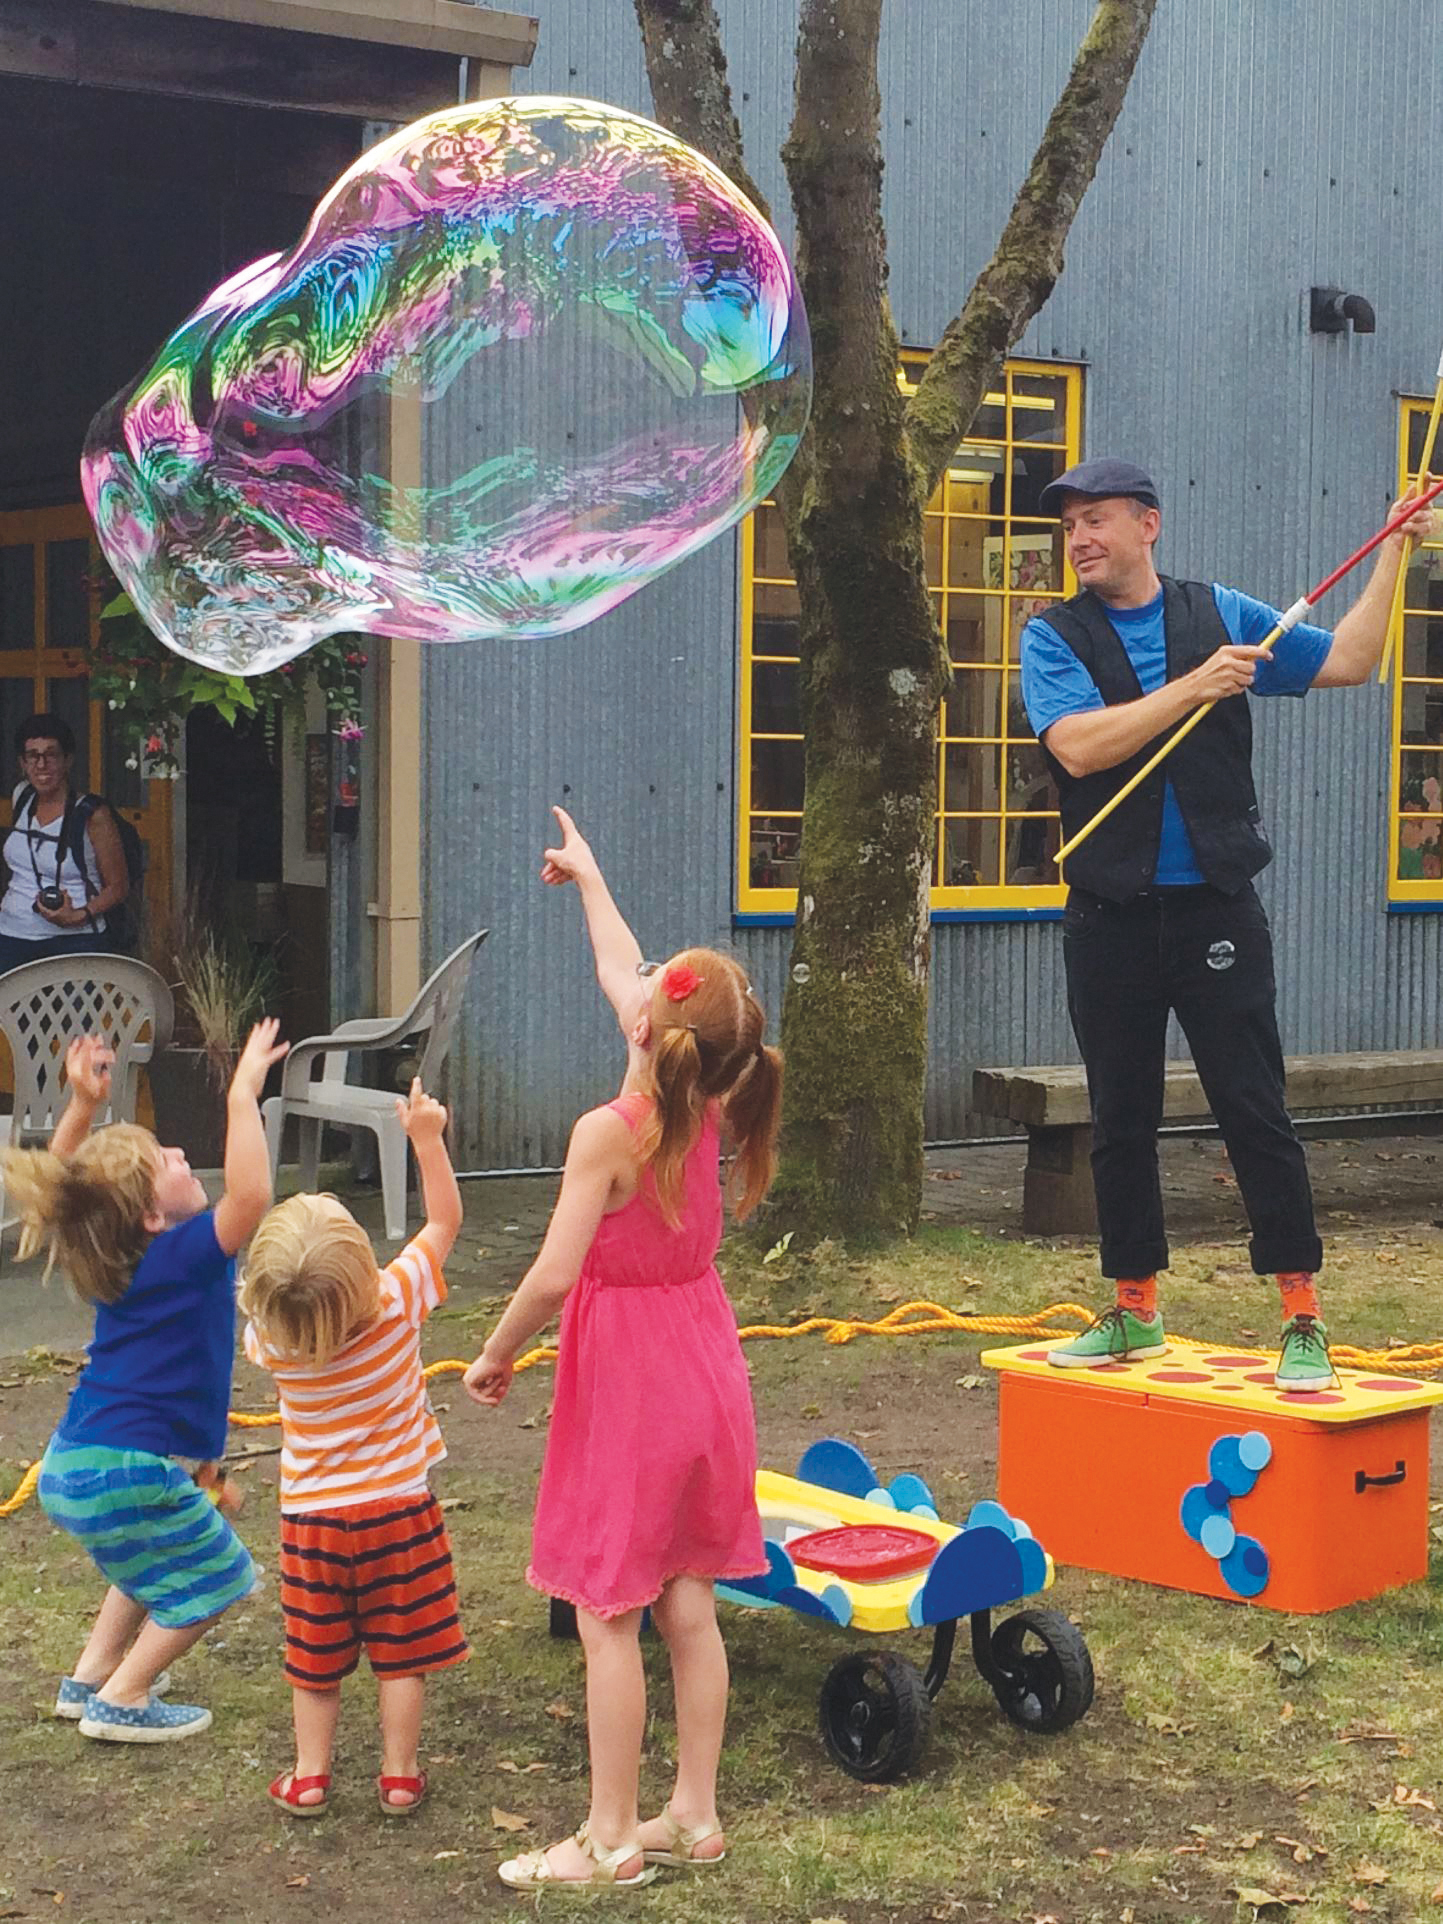 "Matt Henry's Big Bubble show. Man blowing a giant bubble for kids."